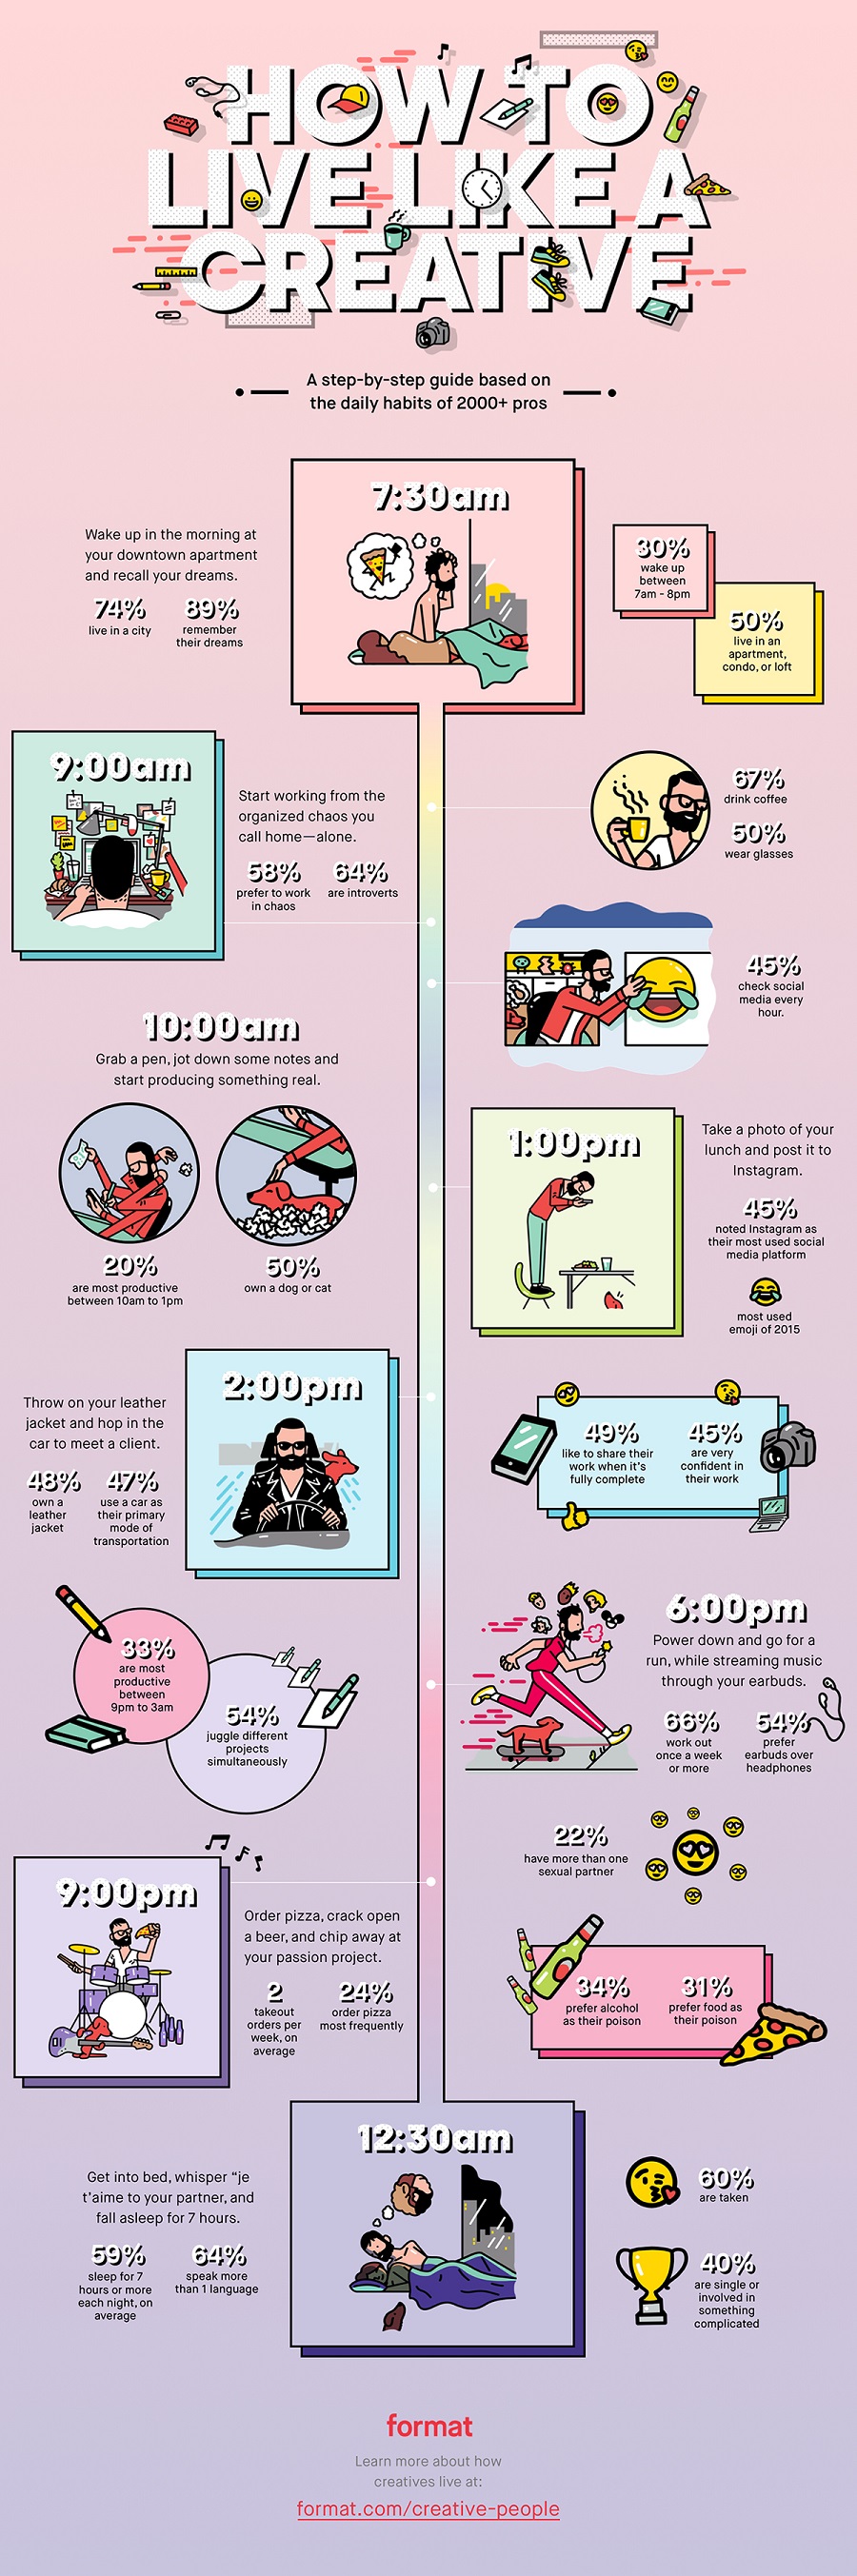 how to live like a creative infographic